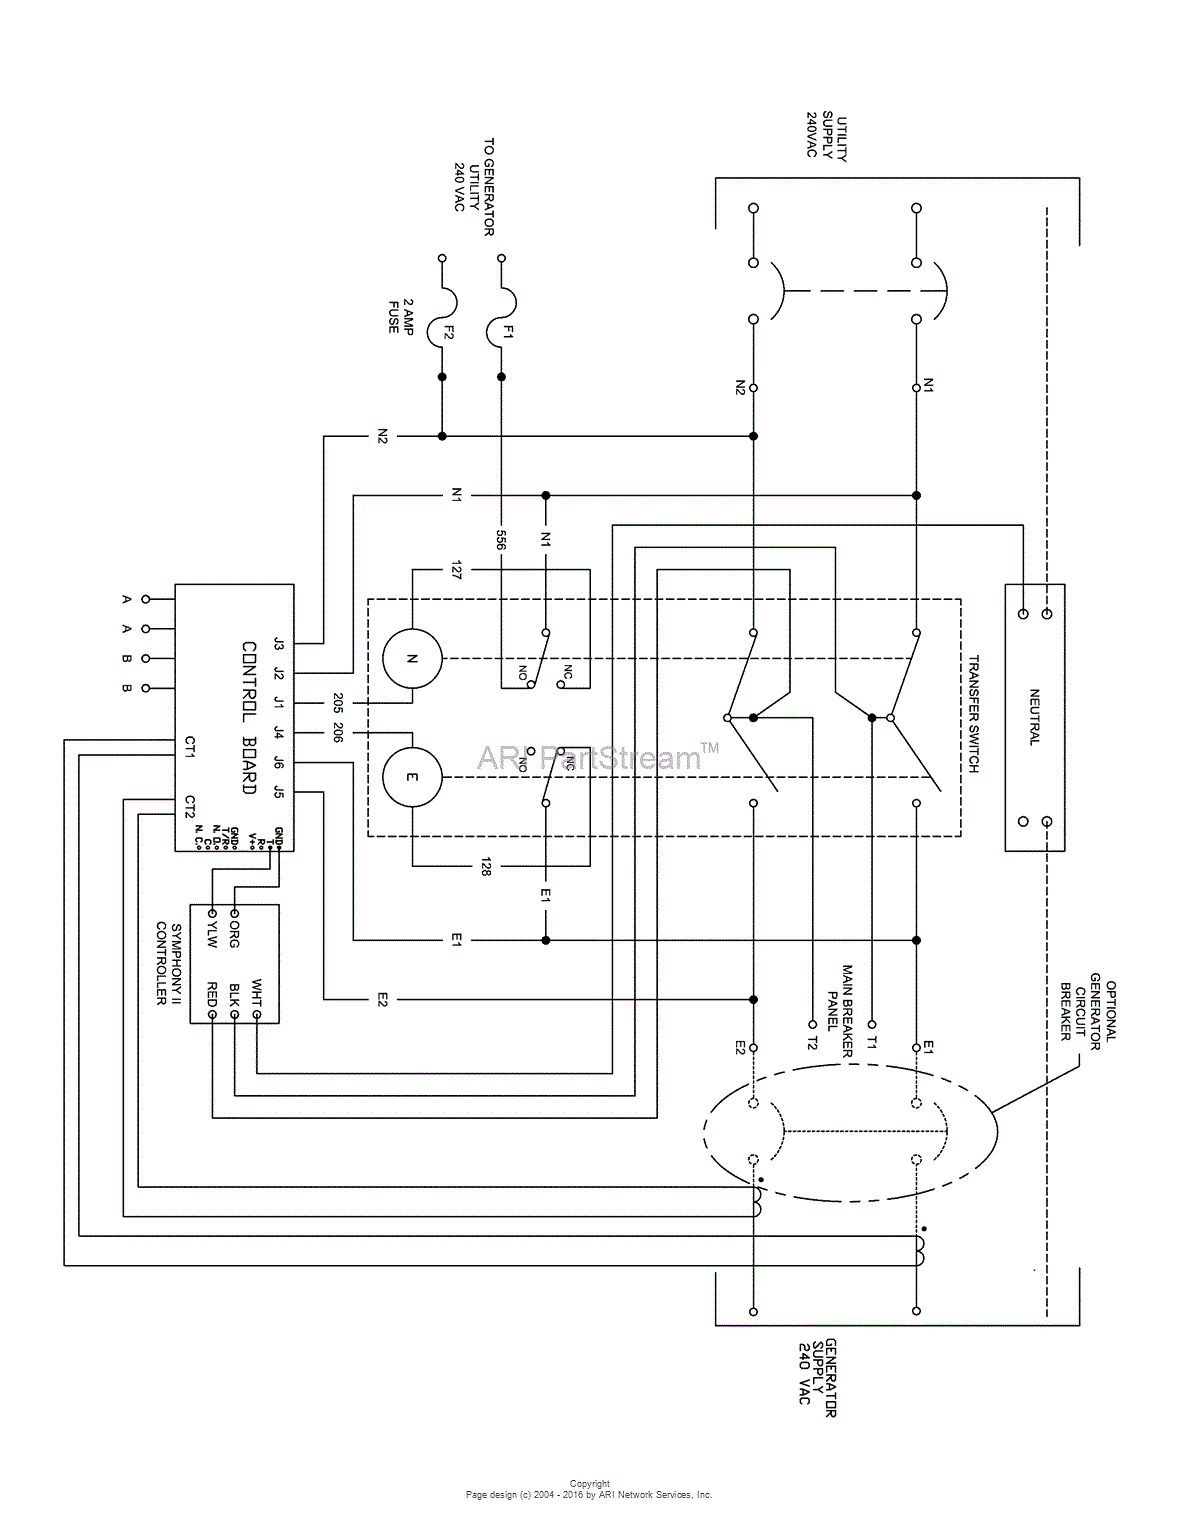 generac transfer switch model 6854 wiring diagram